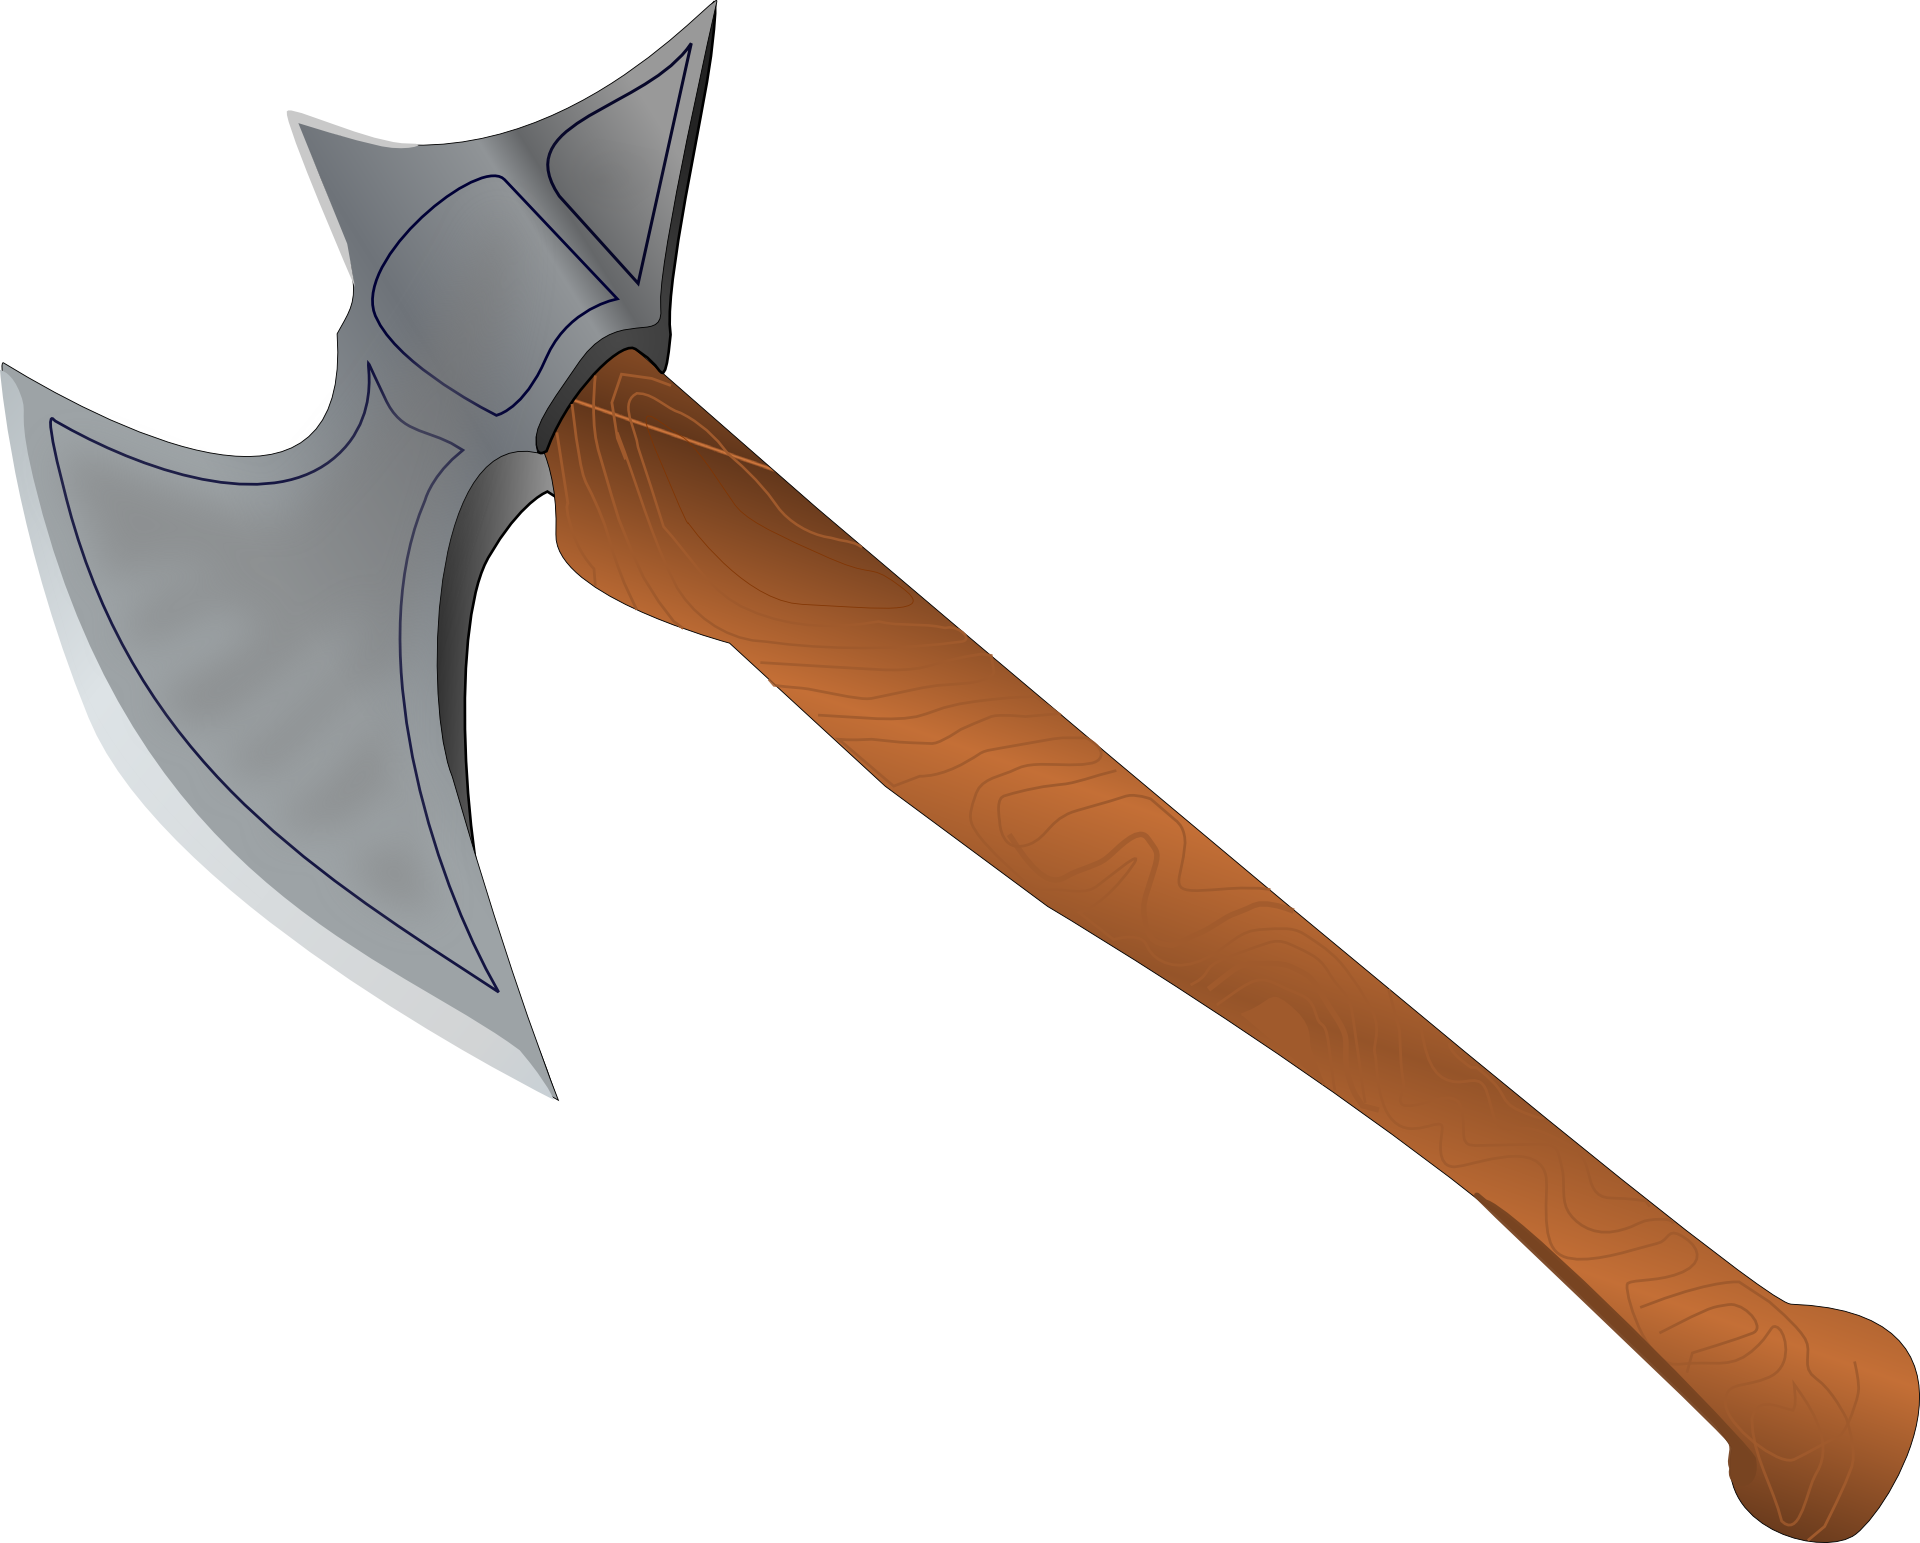 Cartoonish viking axe PNG Image